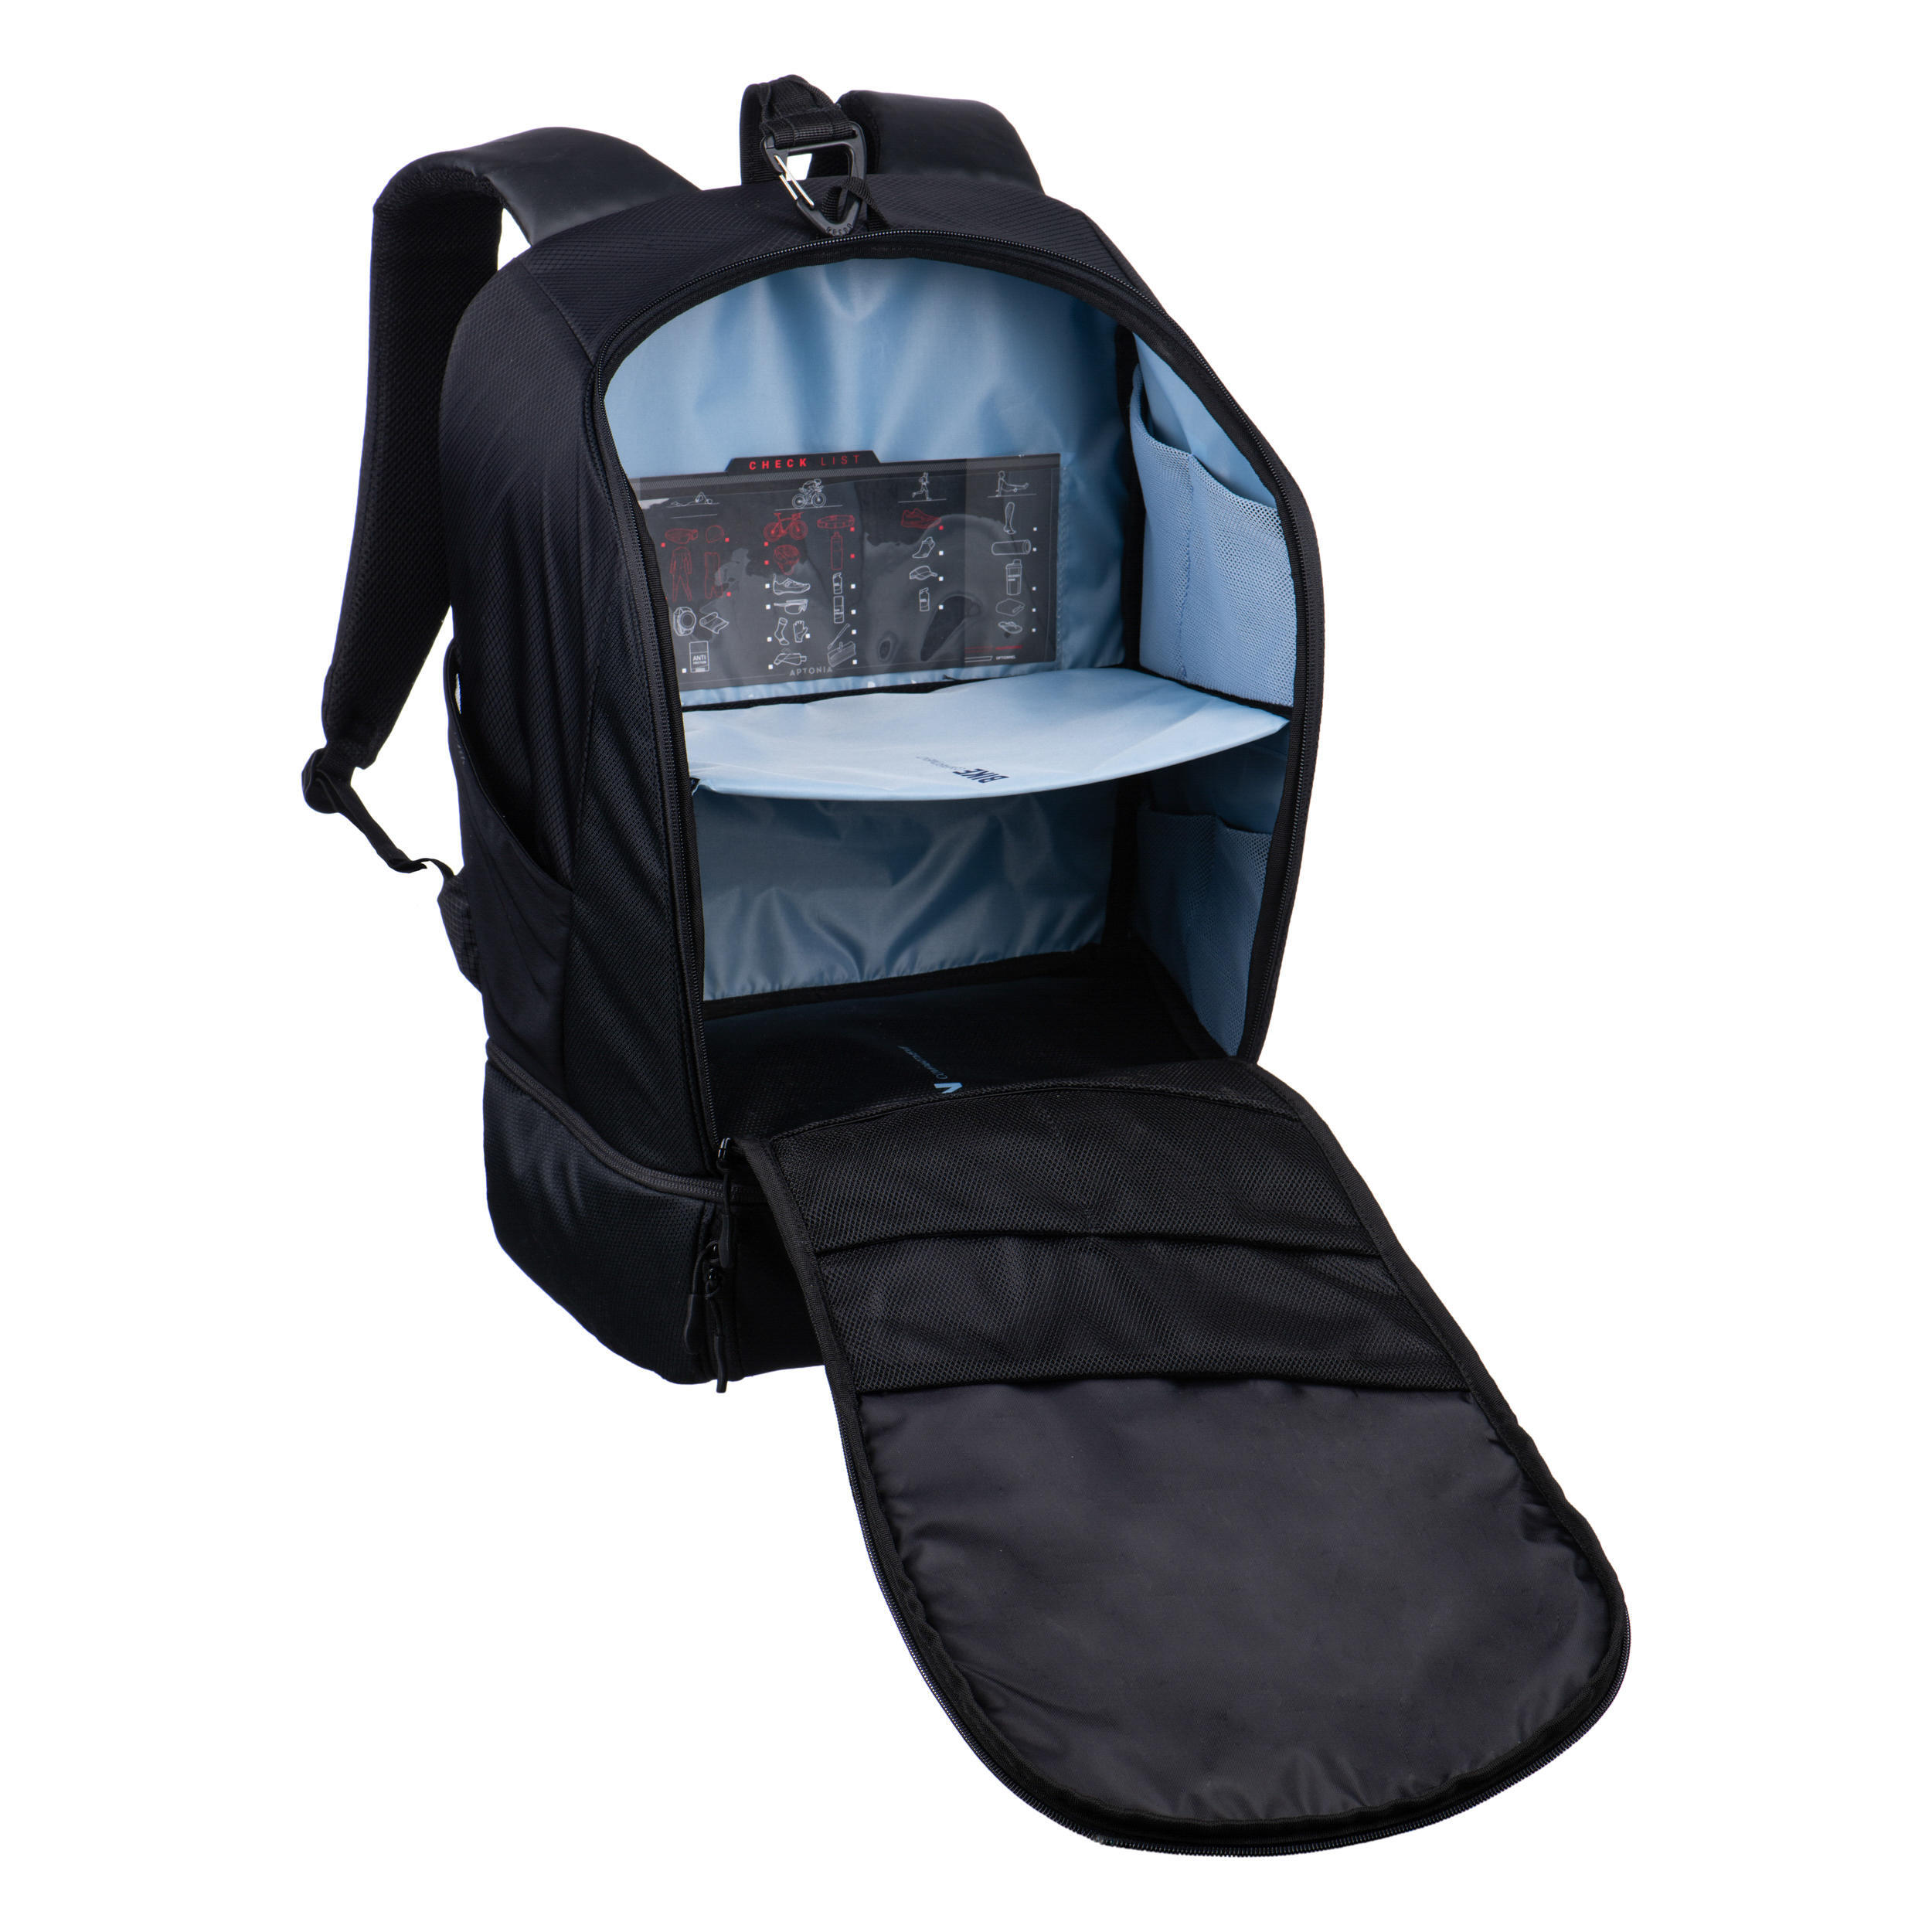 Aptonia Triathlon Transition Bag 35L - Black/Blue 2/10